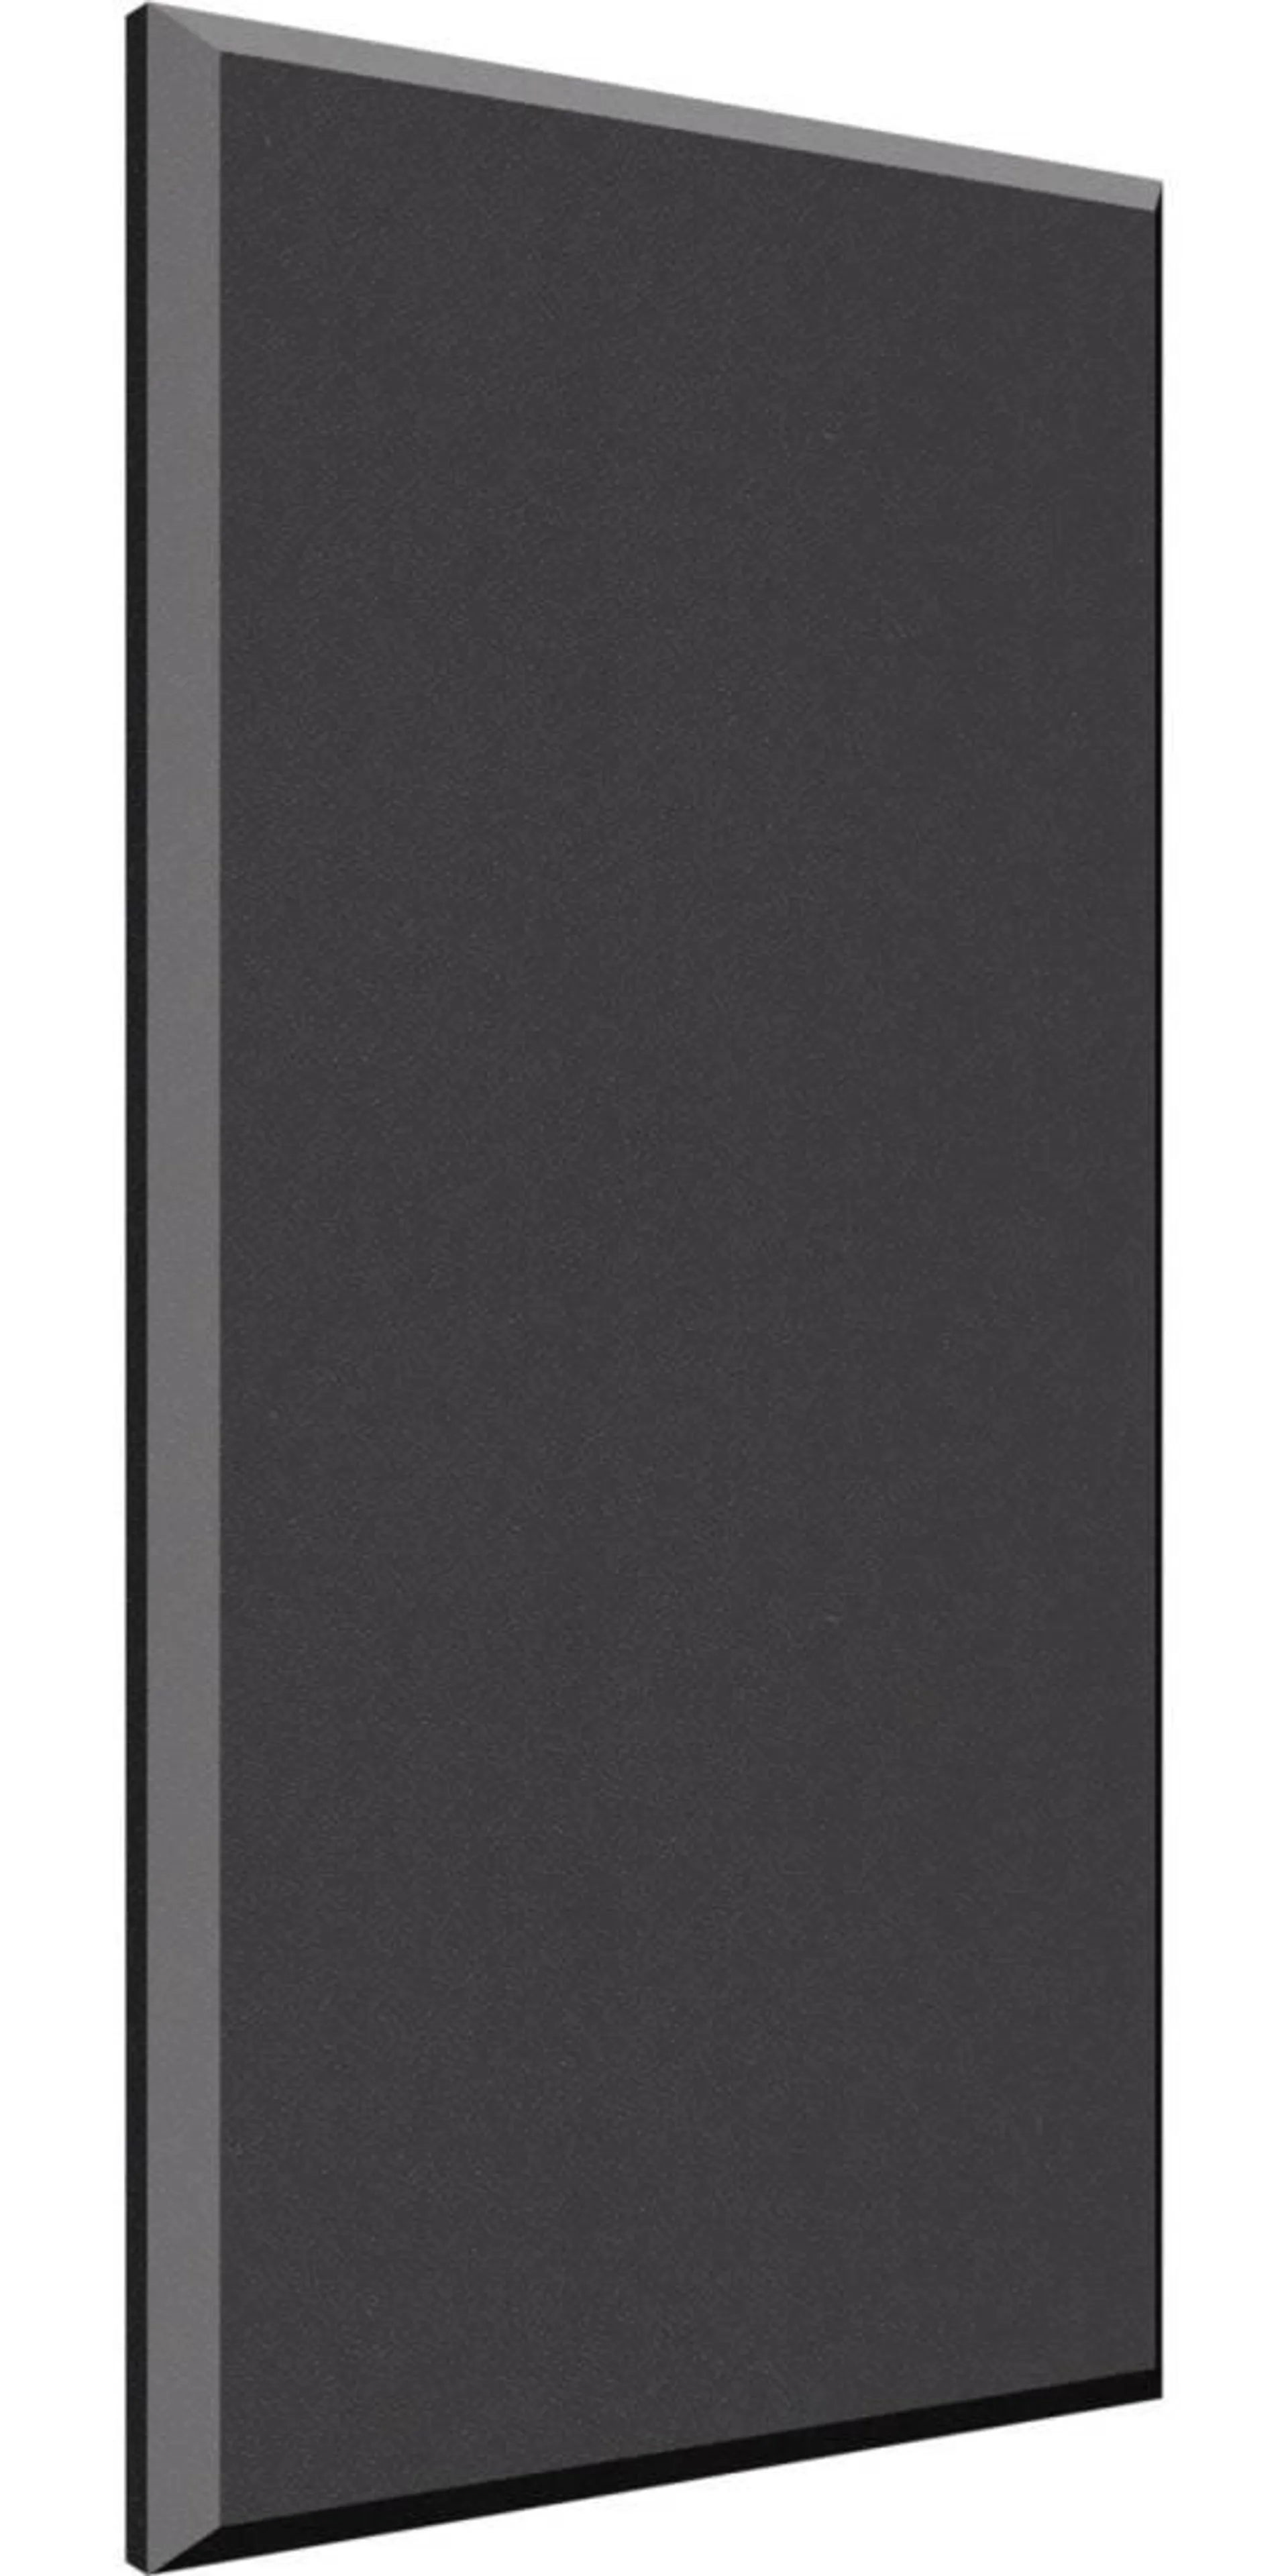 B224 ProPanel Acoustic Wall Panel (Single) 2'x4'x2'' - Onyx